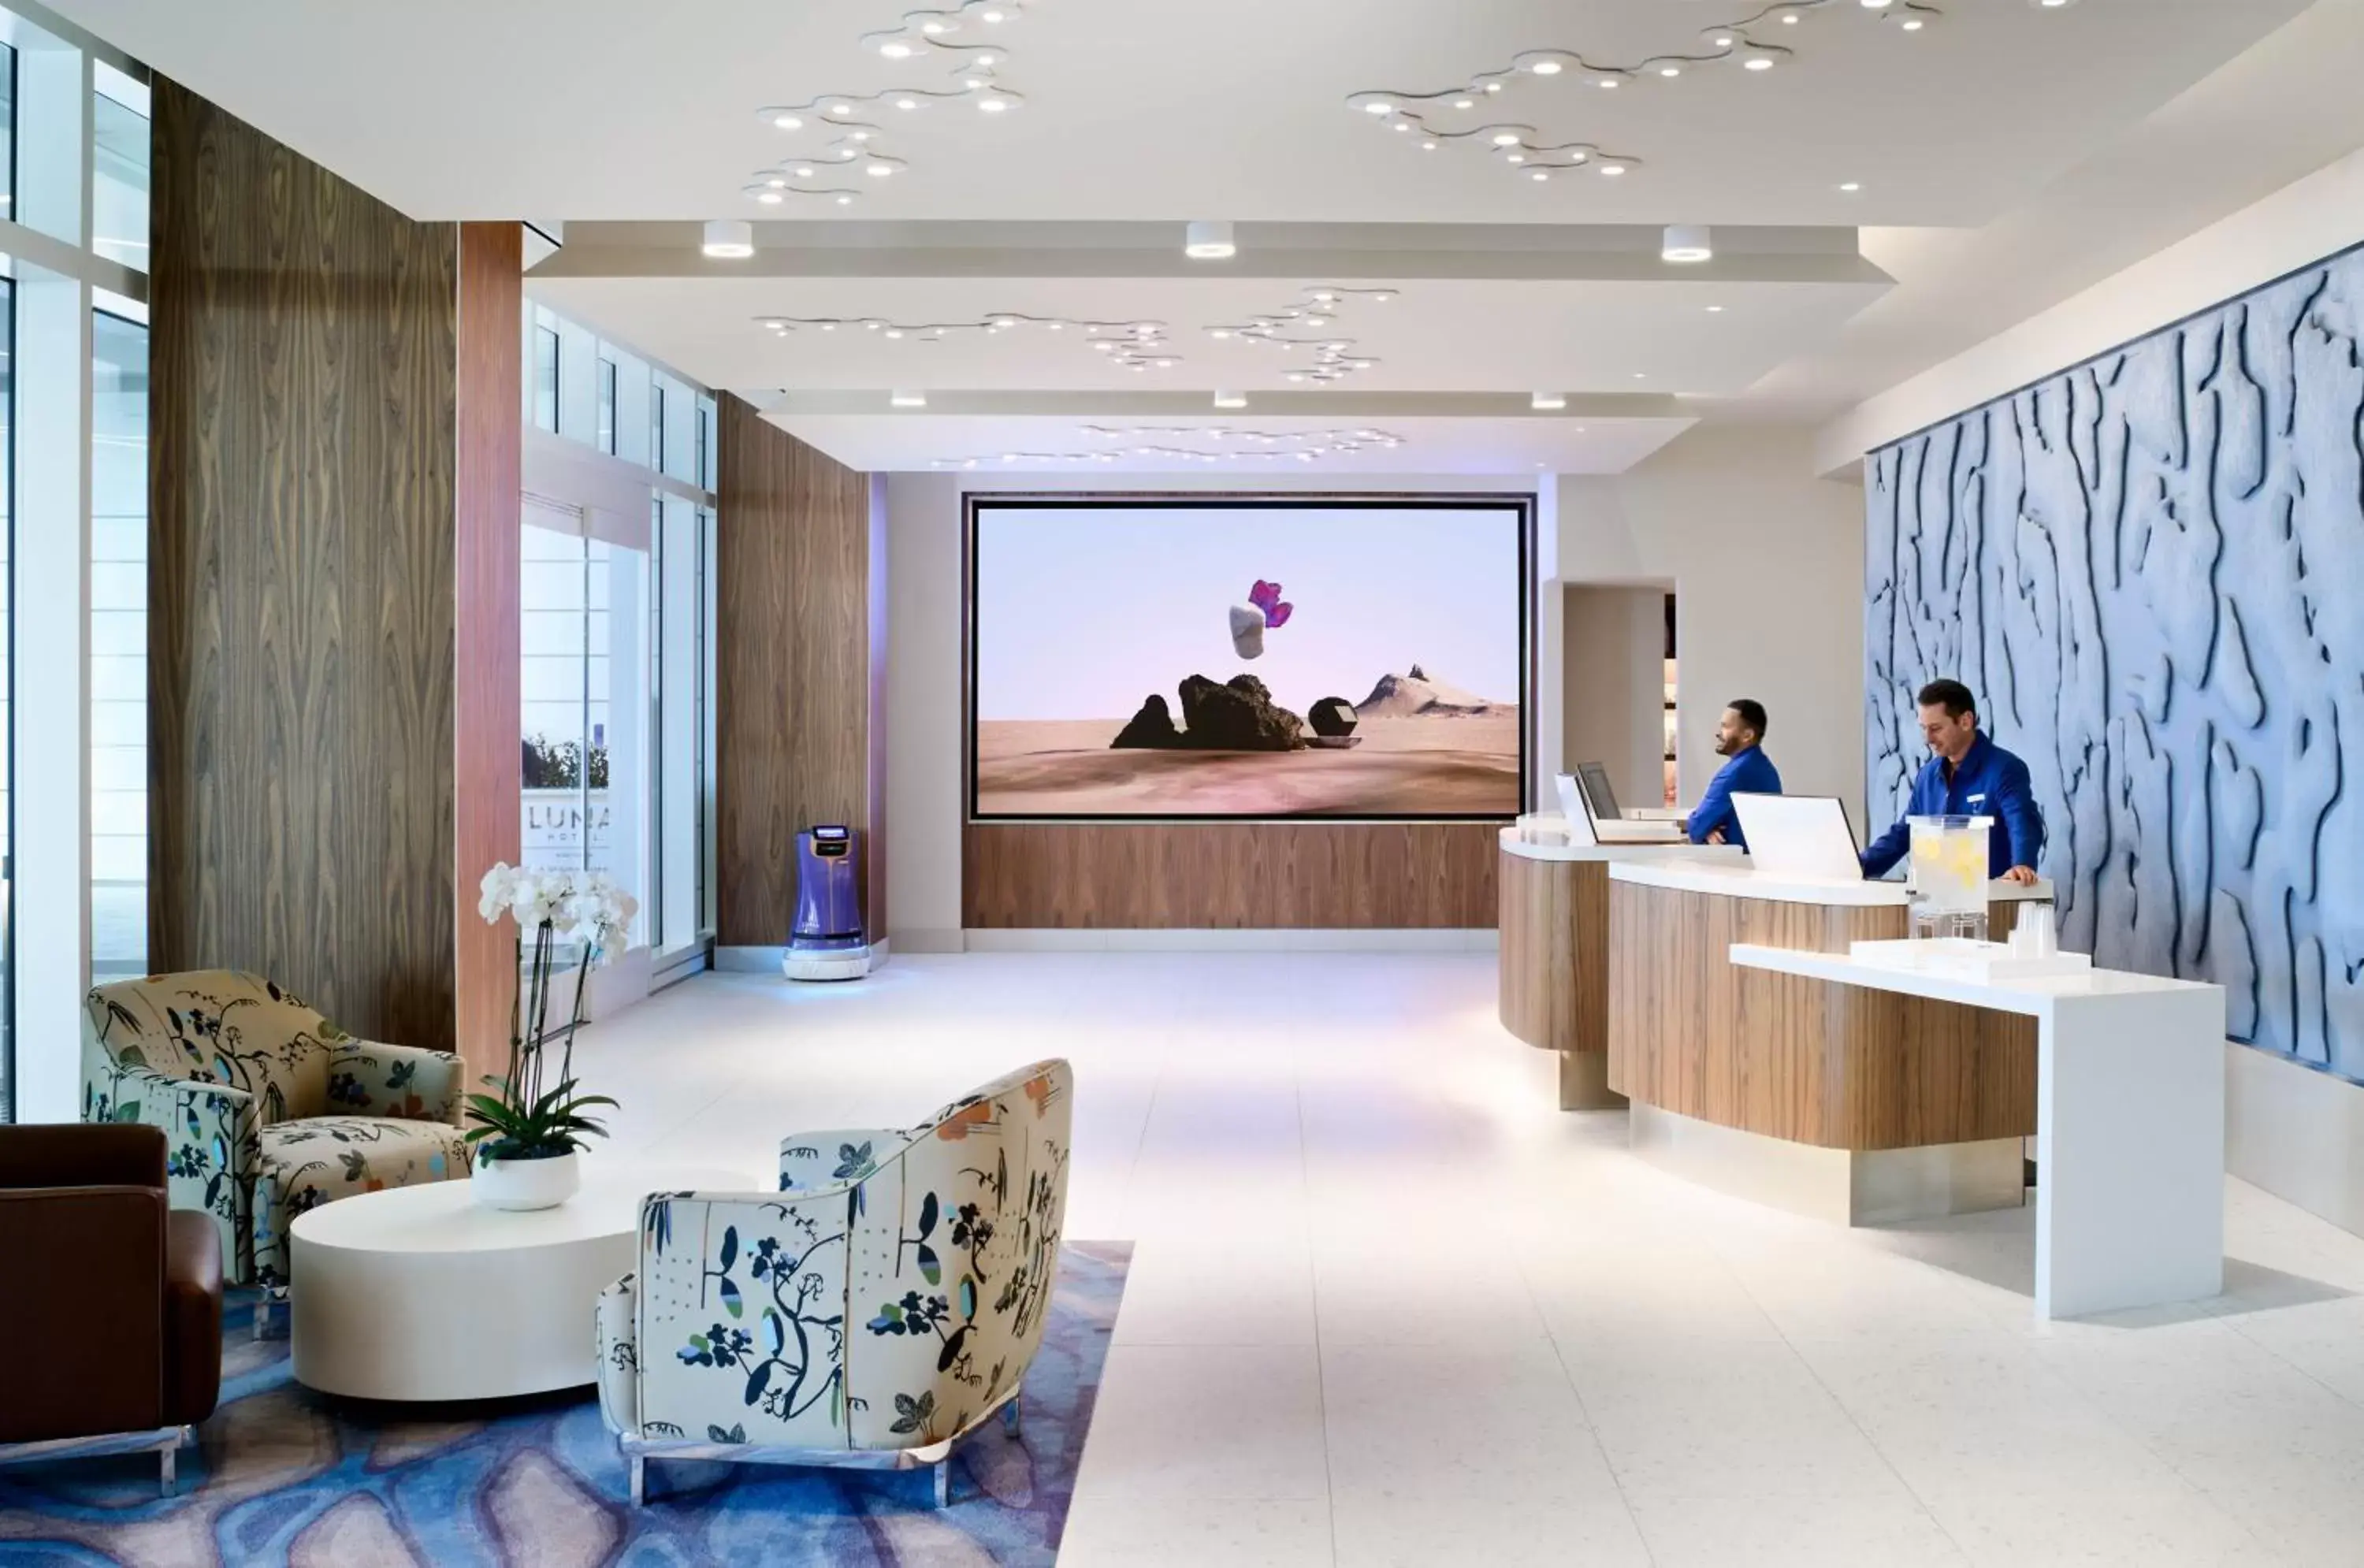 Lobby or reception, Lobby/Reception in LUMA Hotel San Francisco - #1 Hottest New Hotel in the US